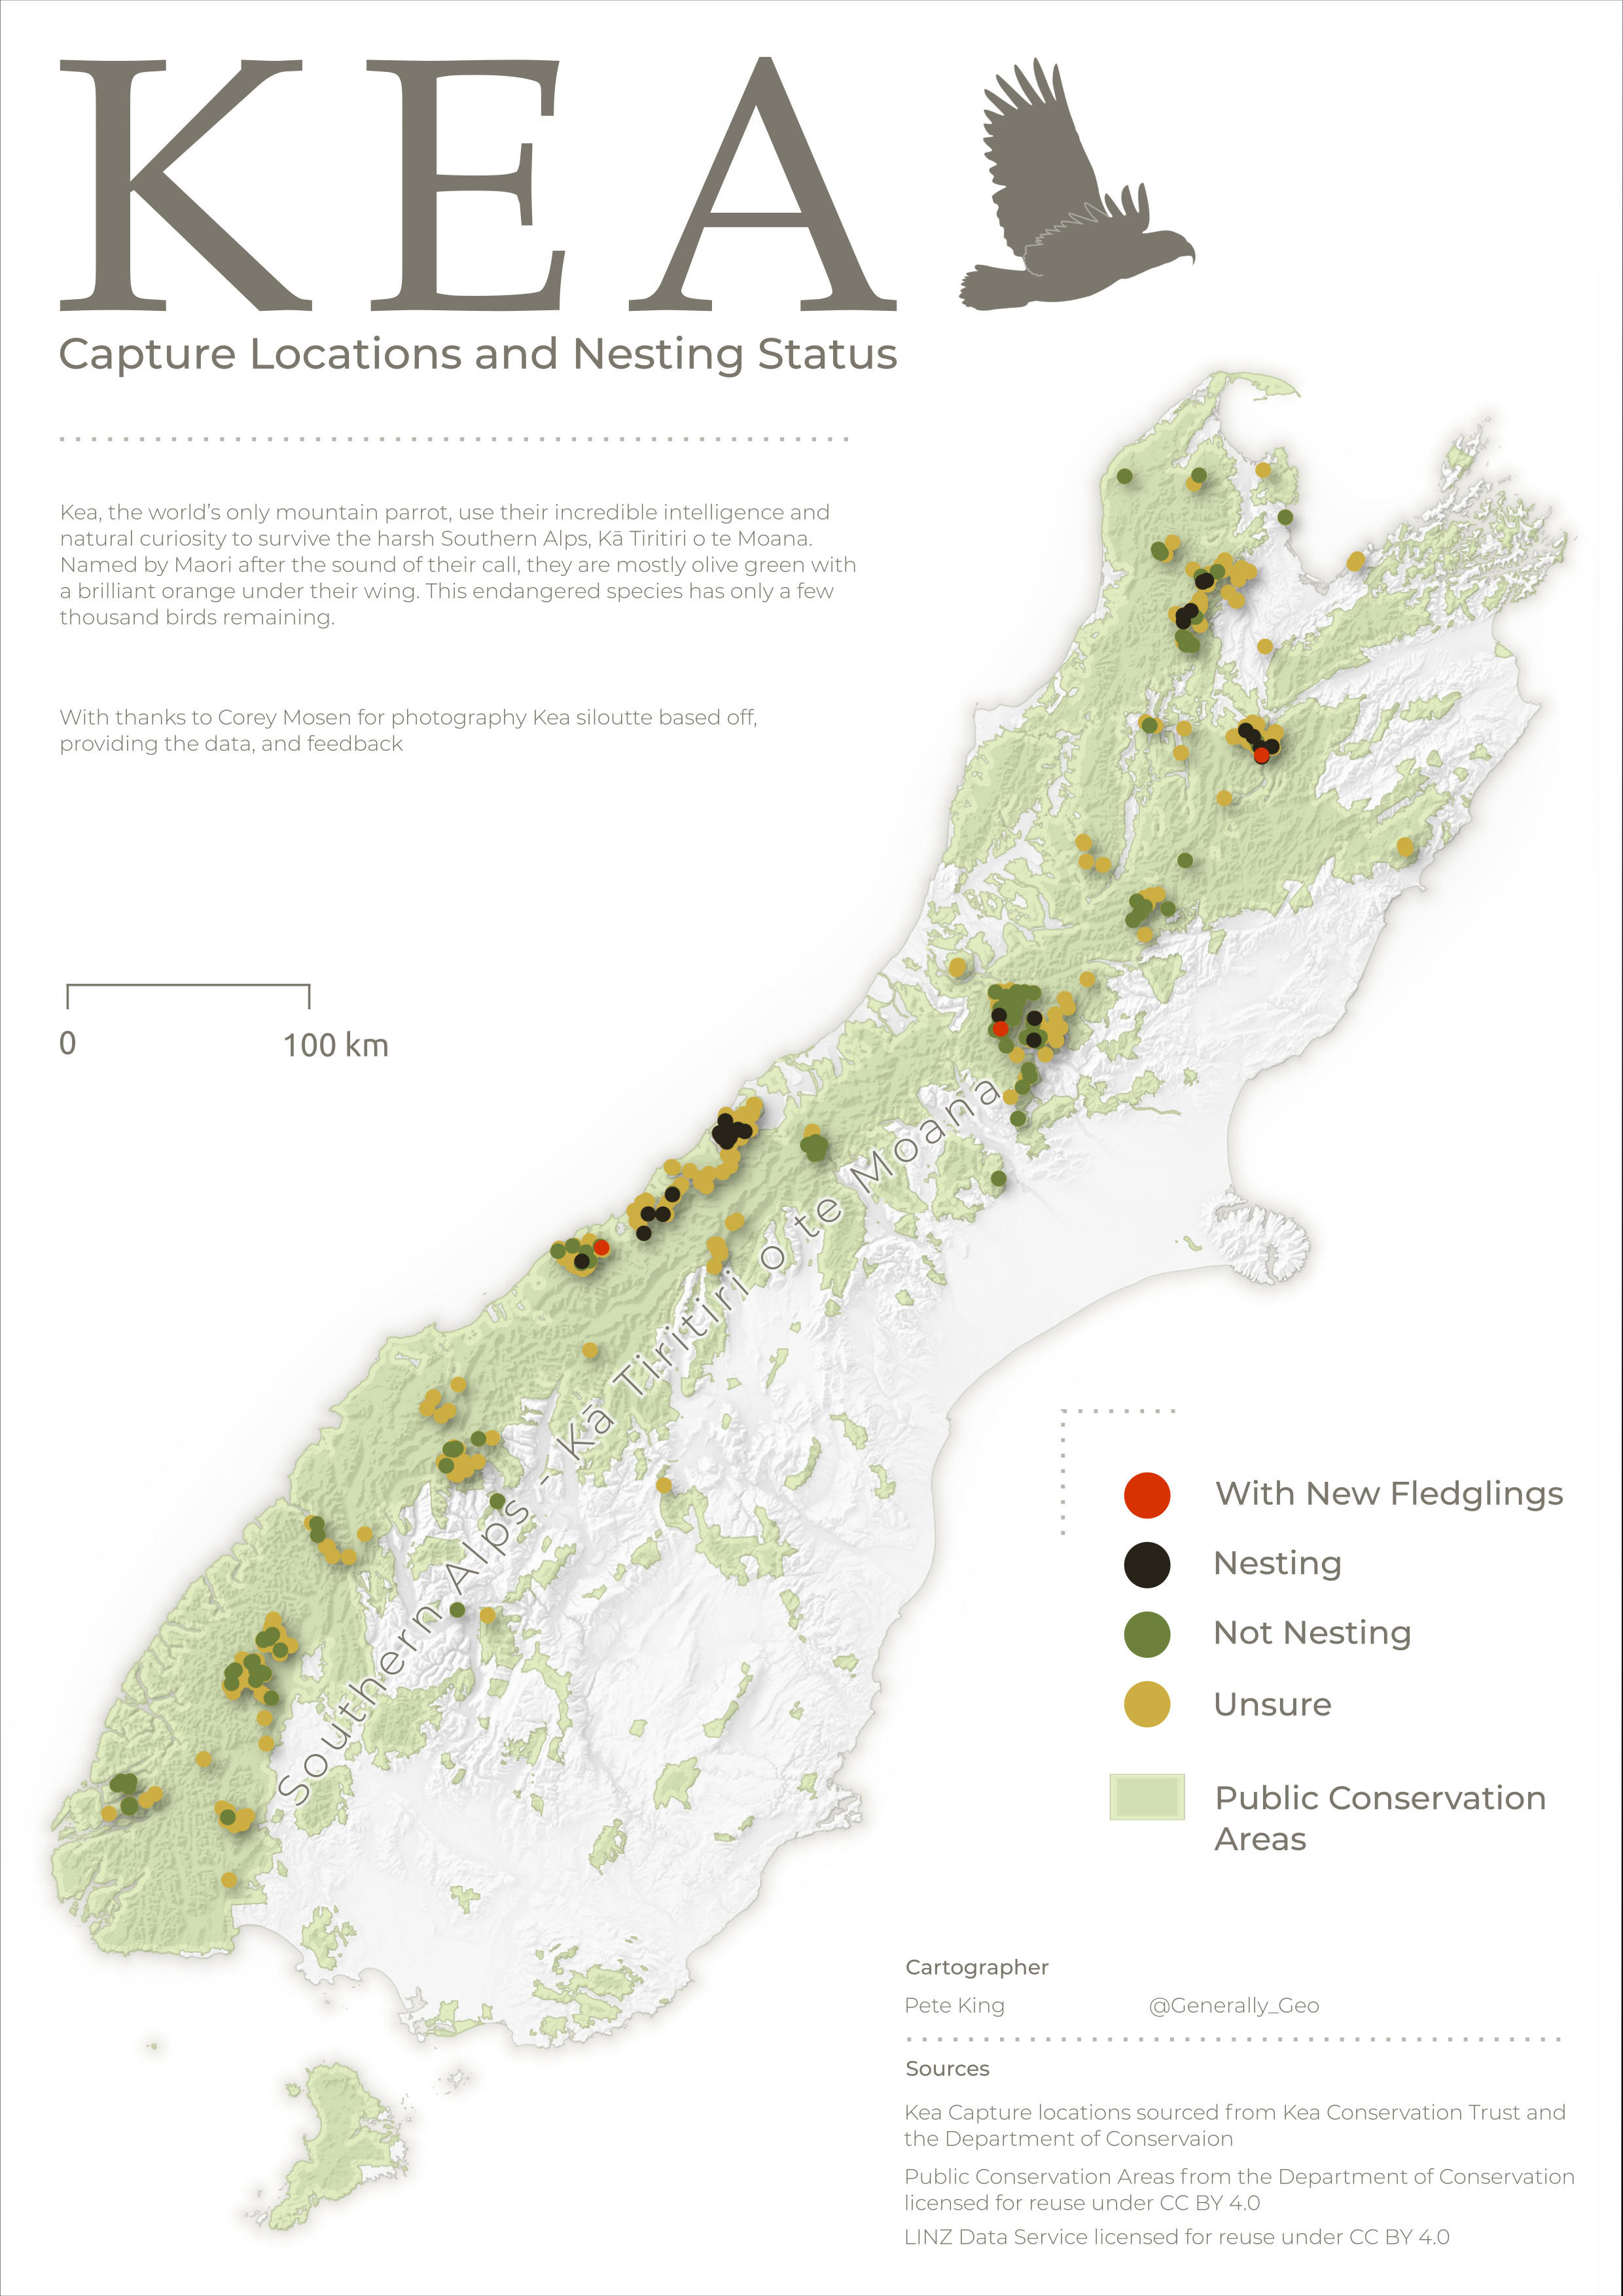 Kea Capture Locations and Nesting Status